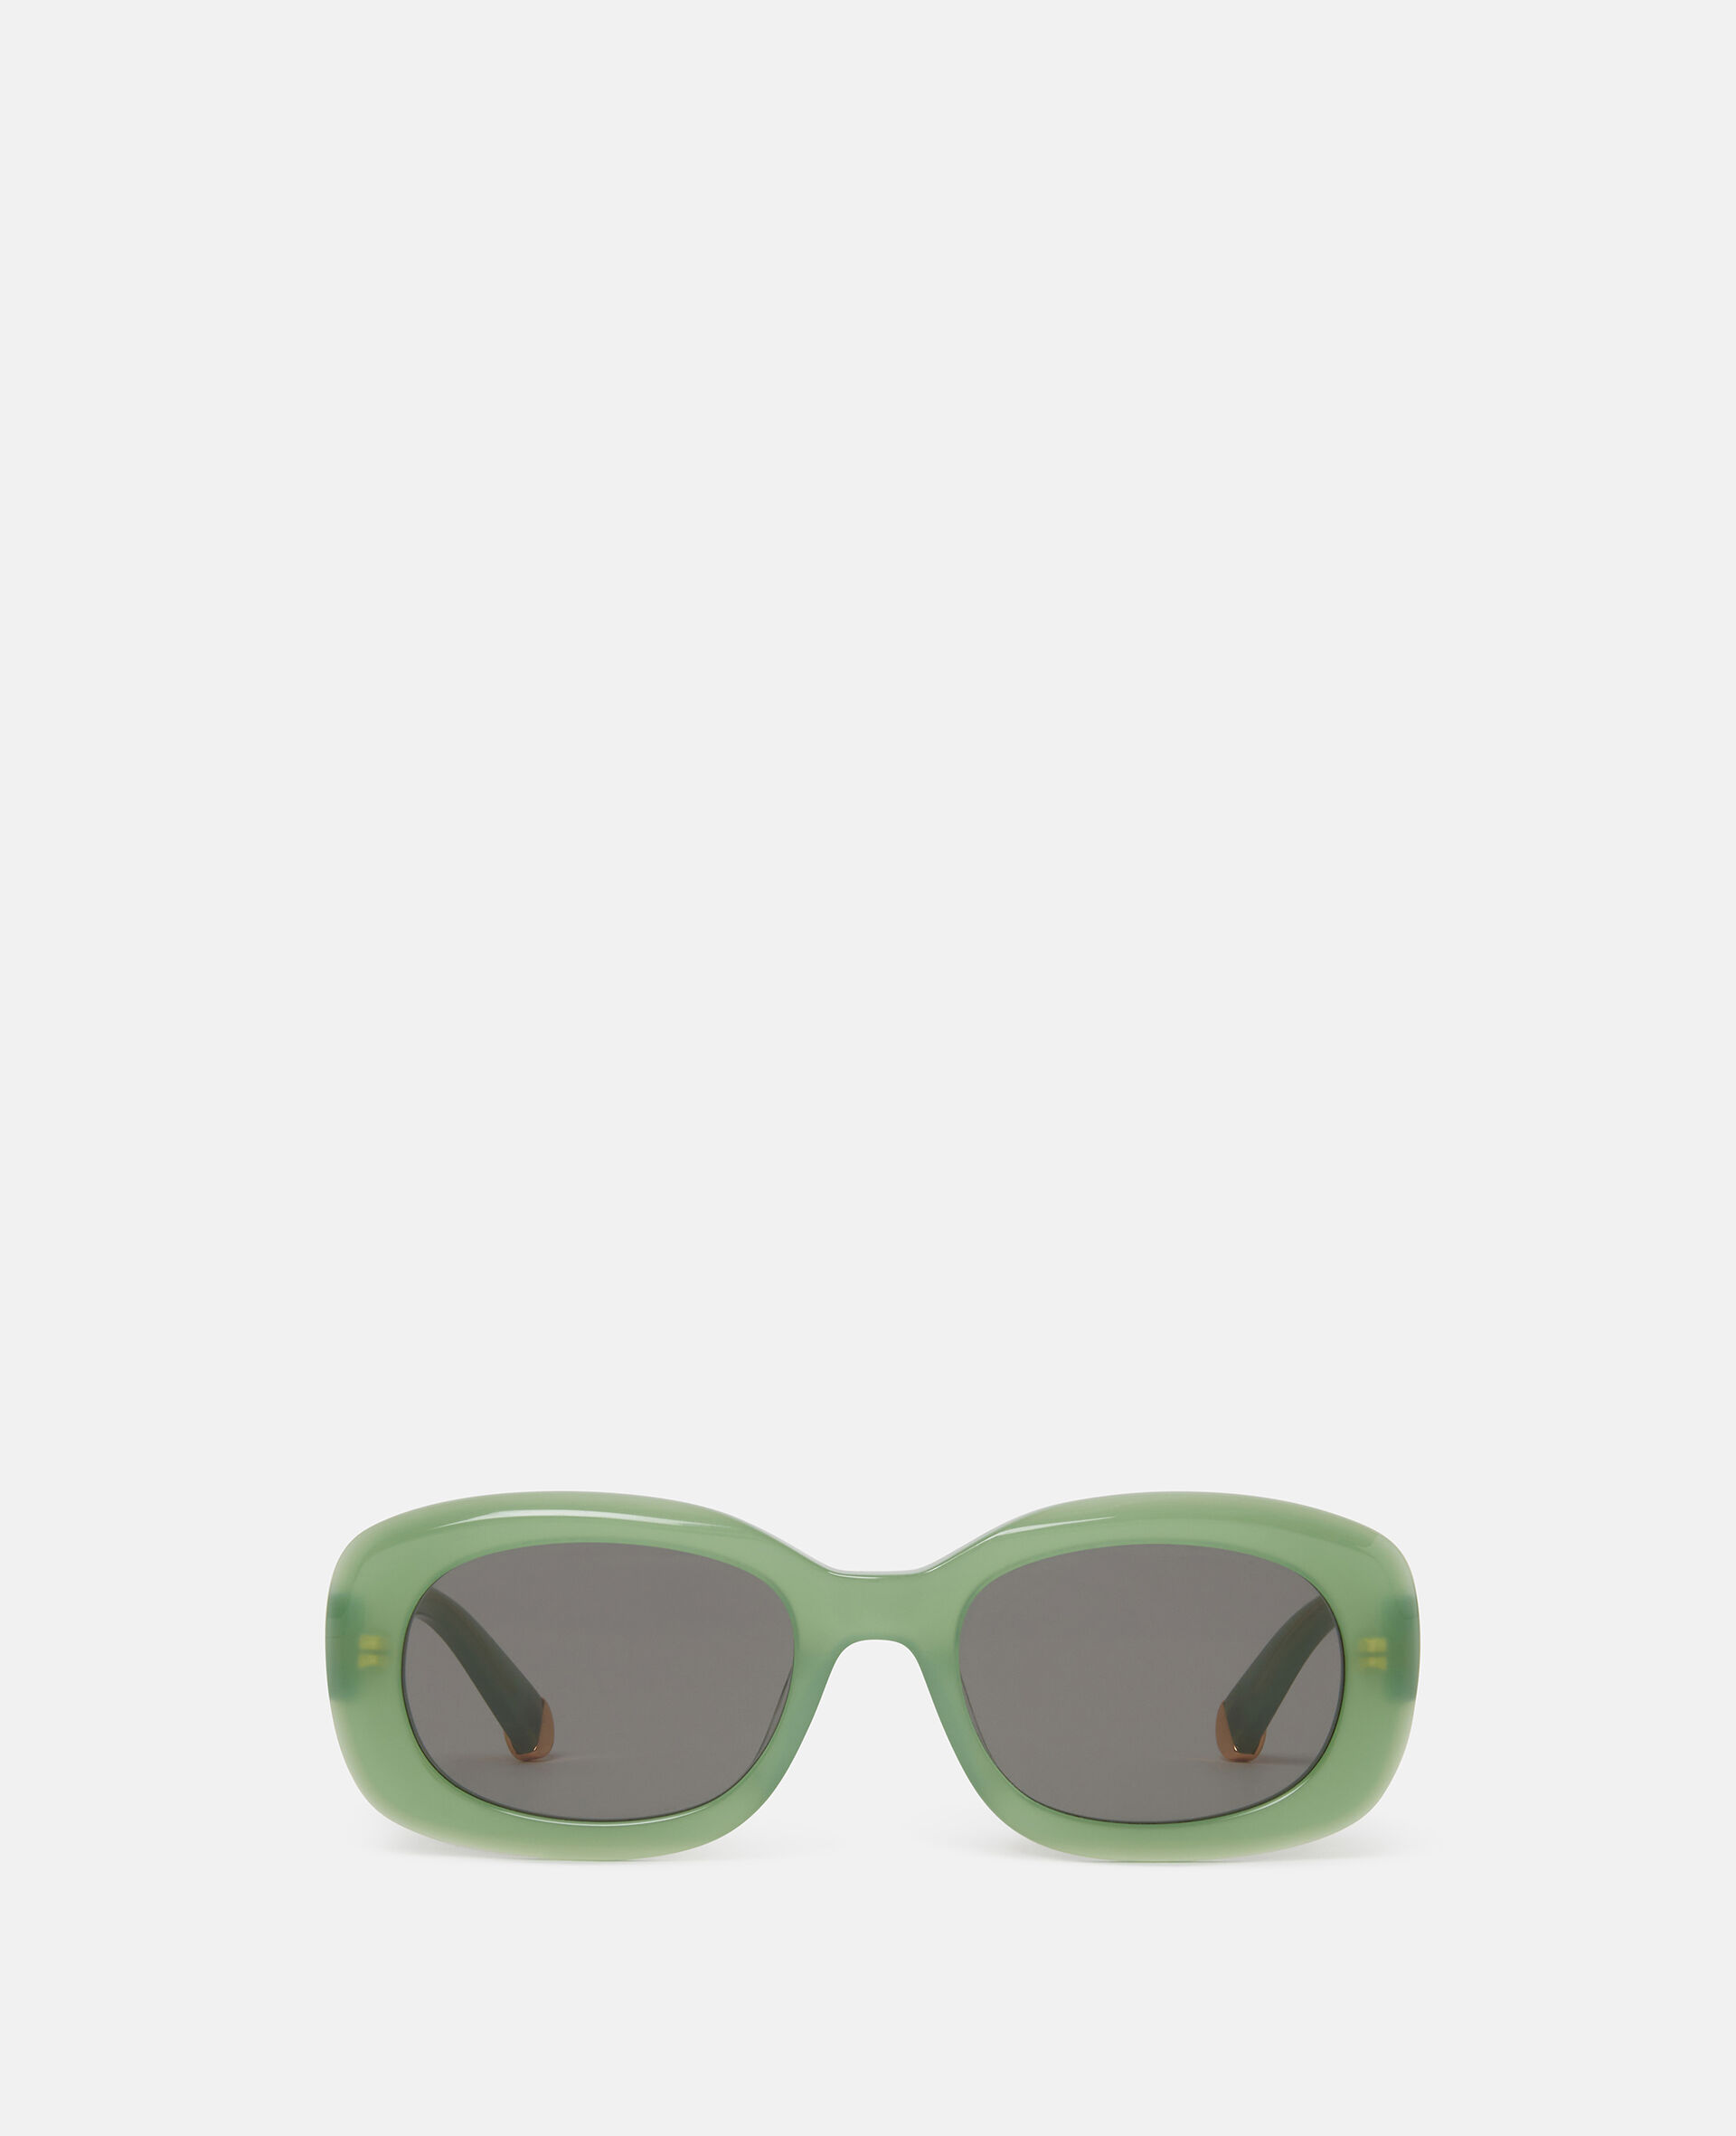 Chunky Oval Sunglasses-Black-large image number 0